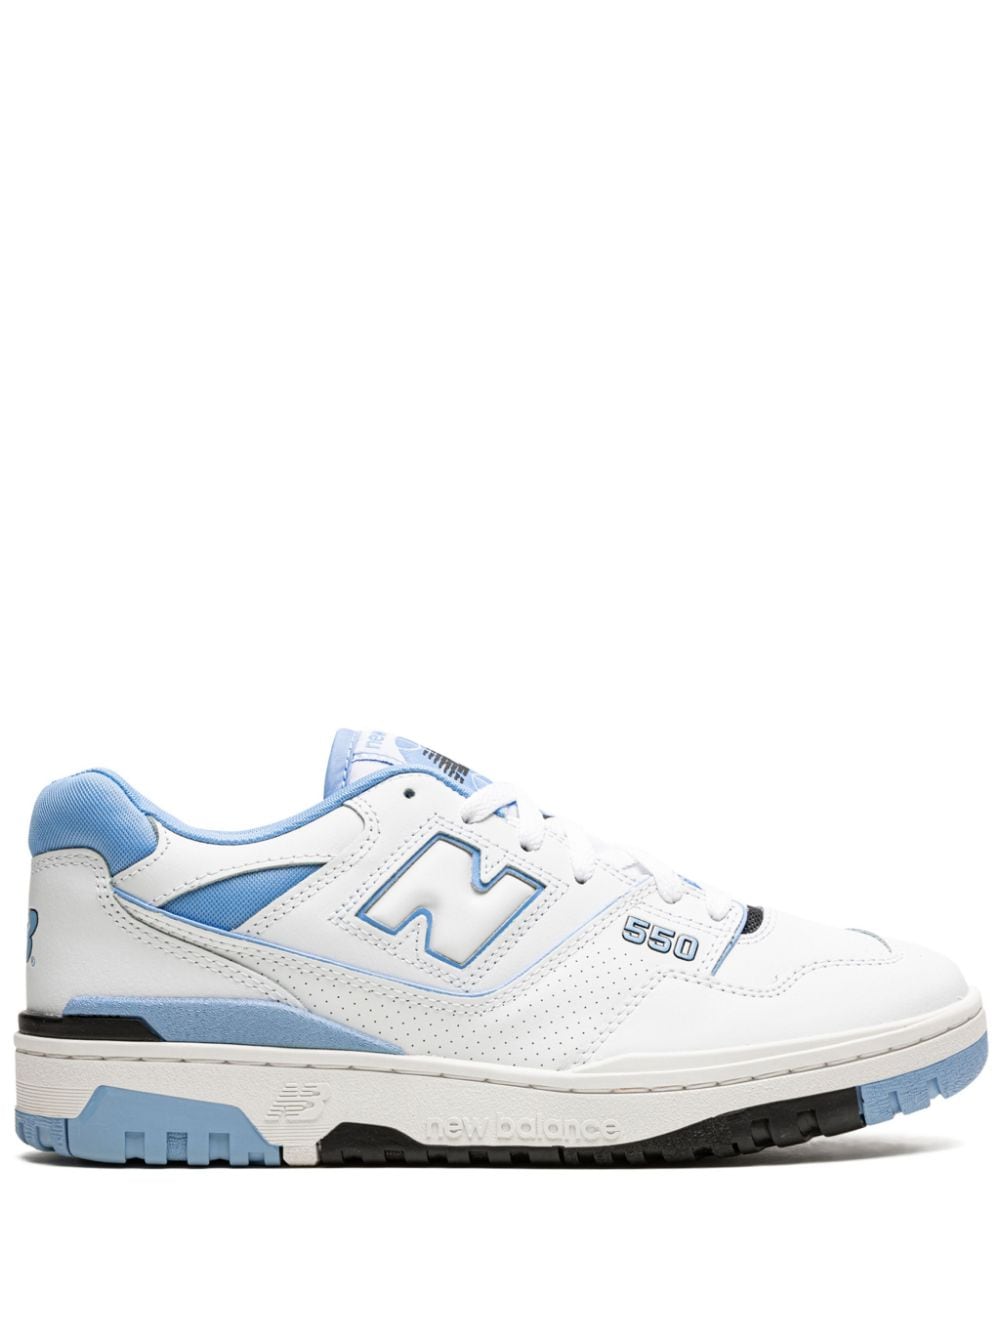 New Balance 550 "White/Carolina Blue" sneakers